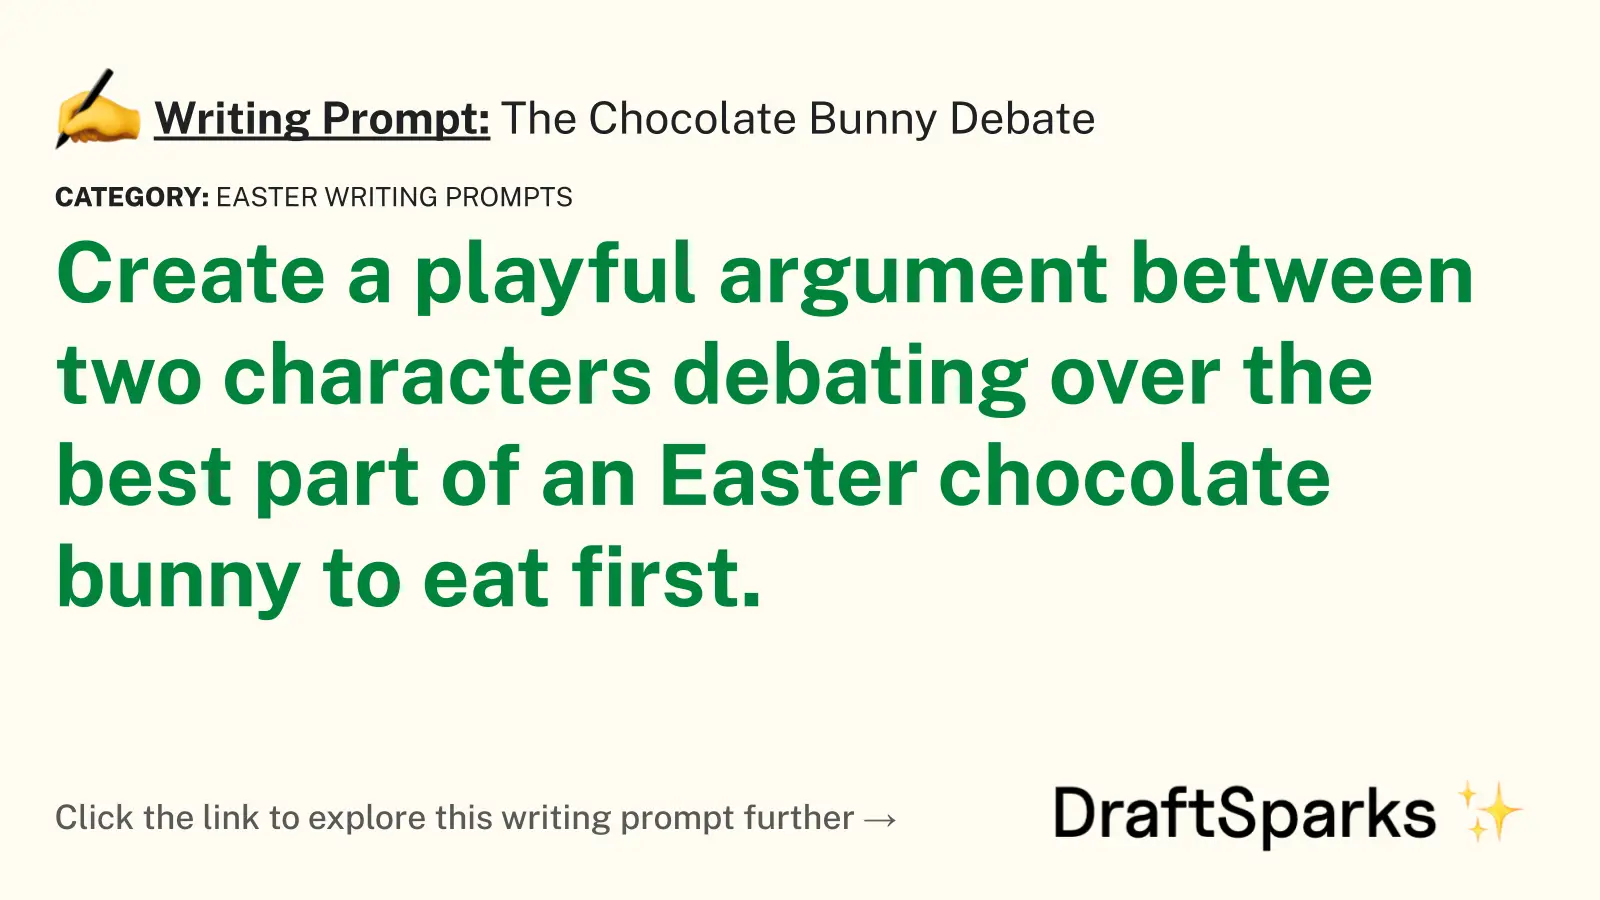 The Chocolate Bunny Debate